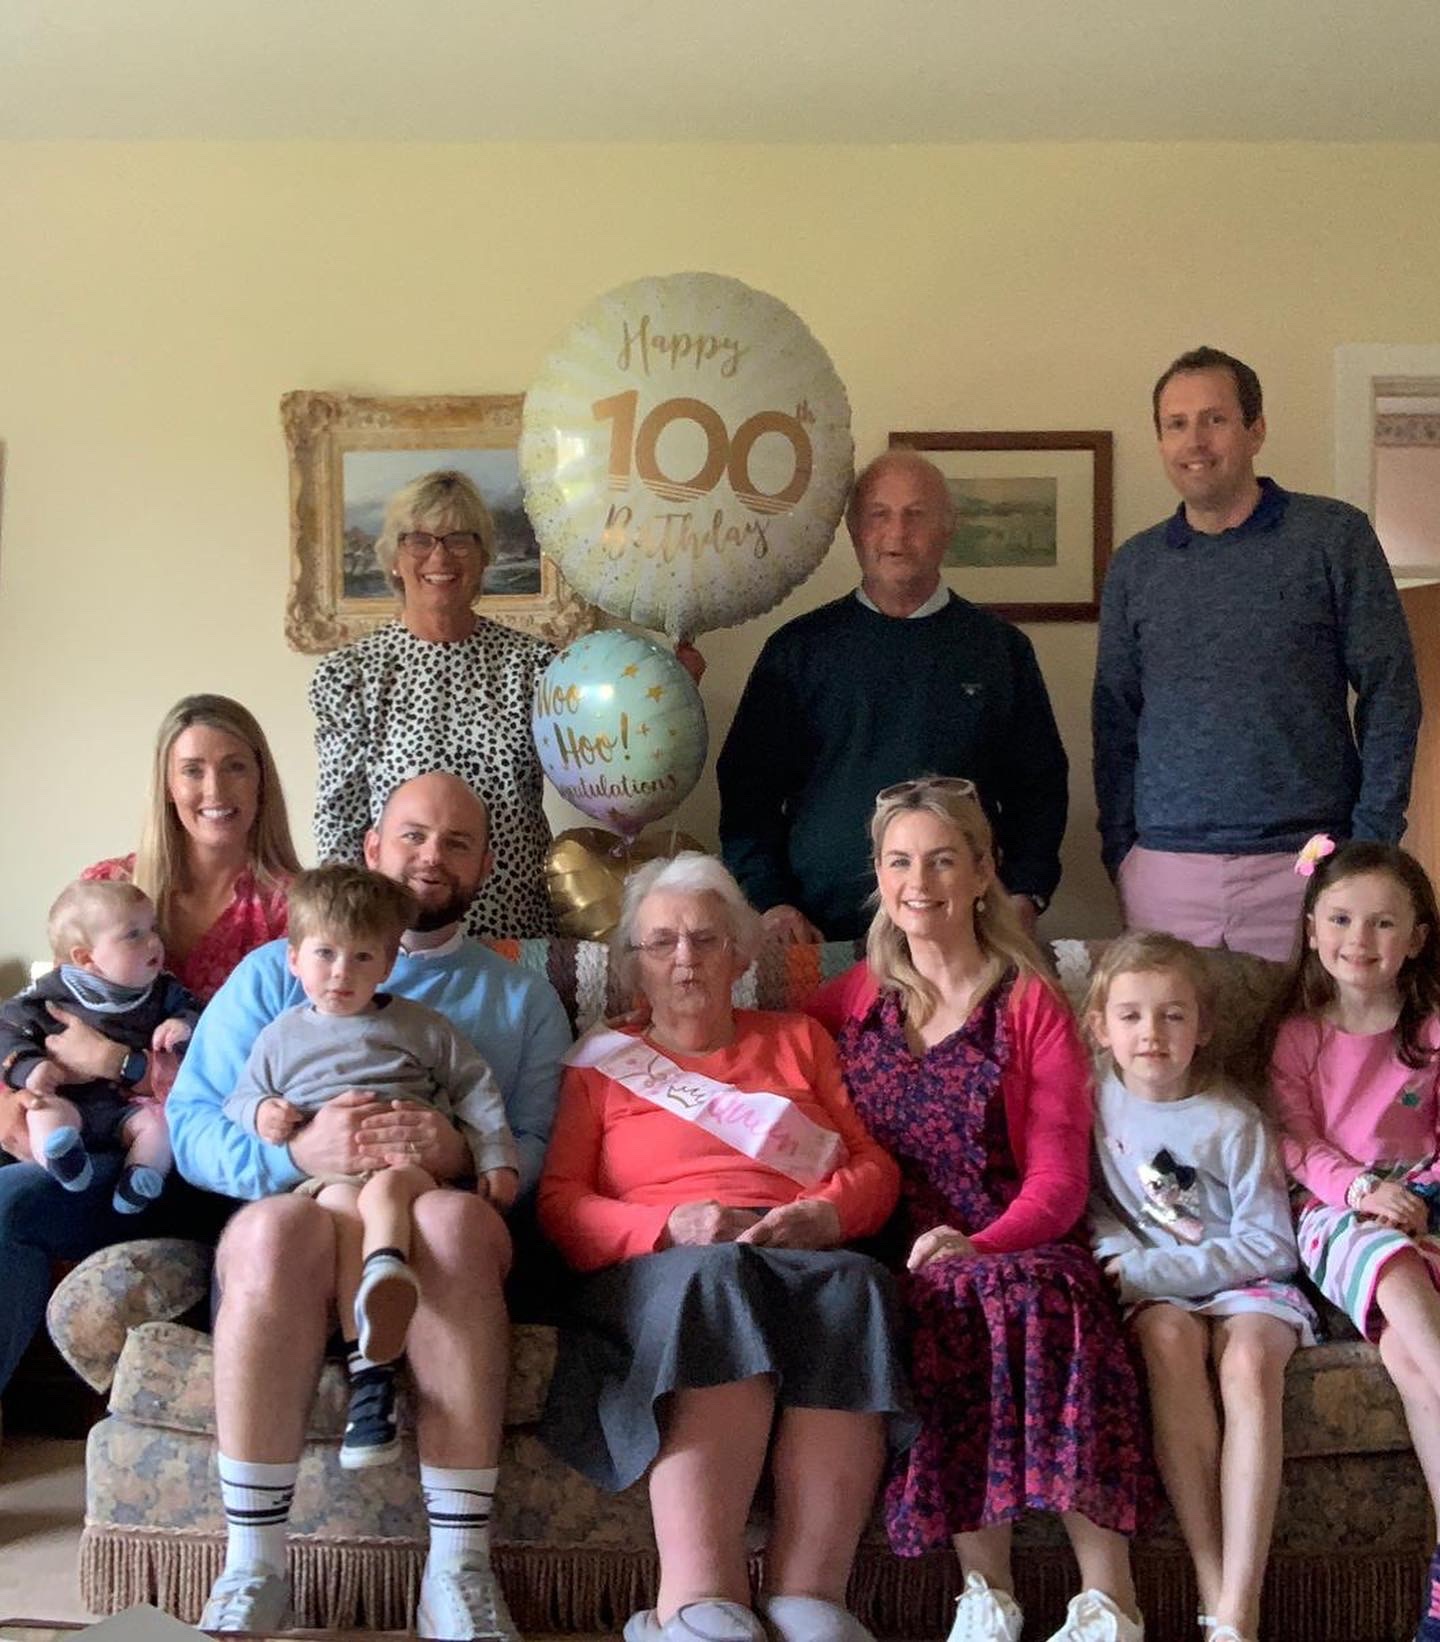 Ethel joined by her extended family celebrating her milestone birthday